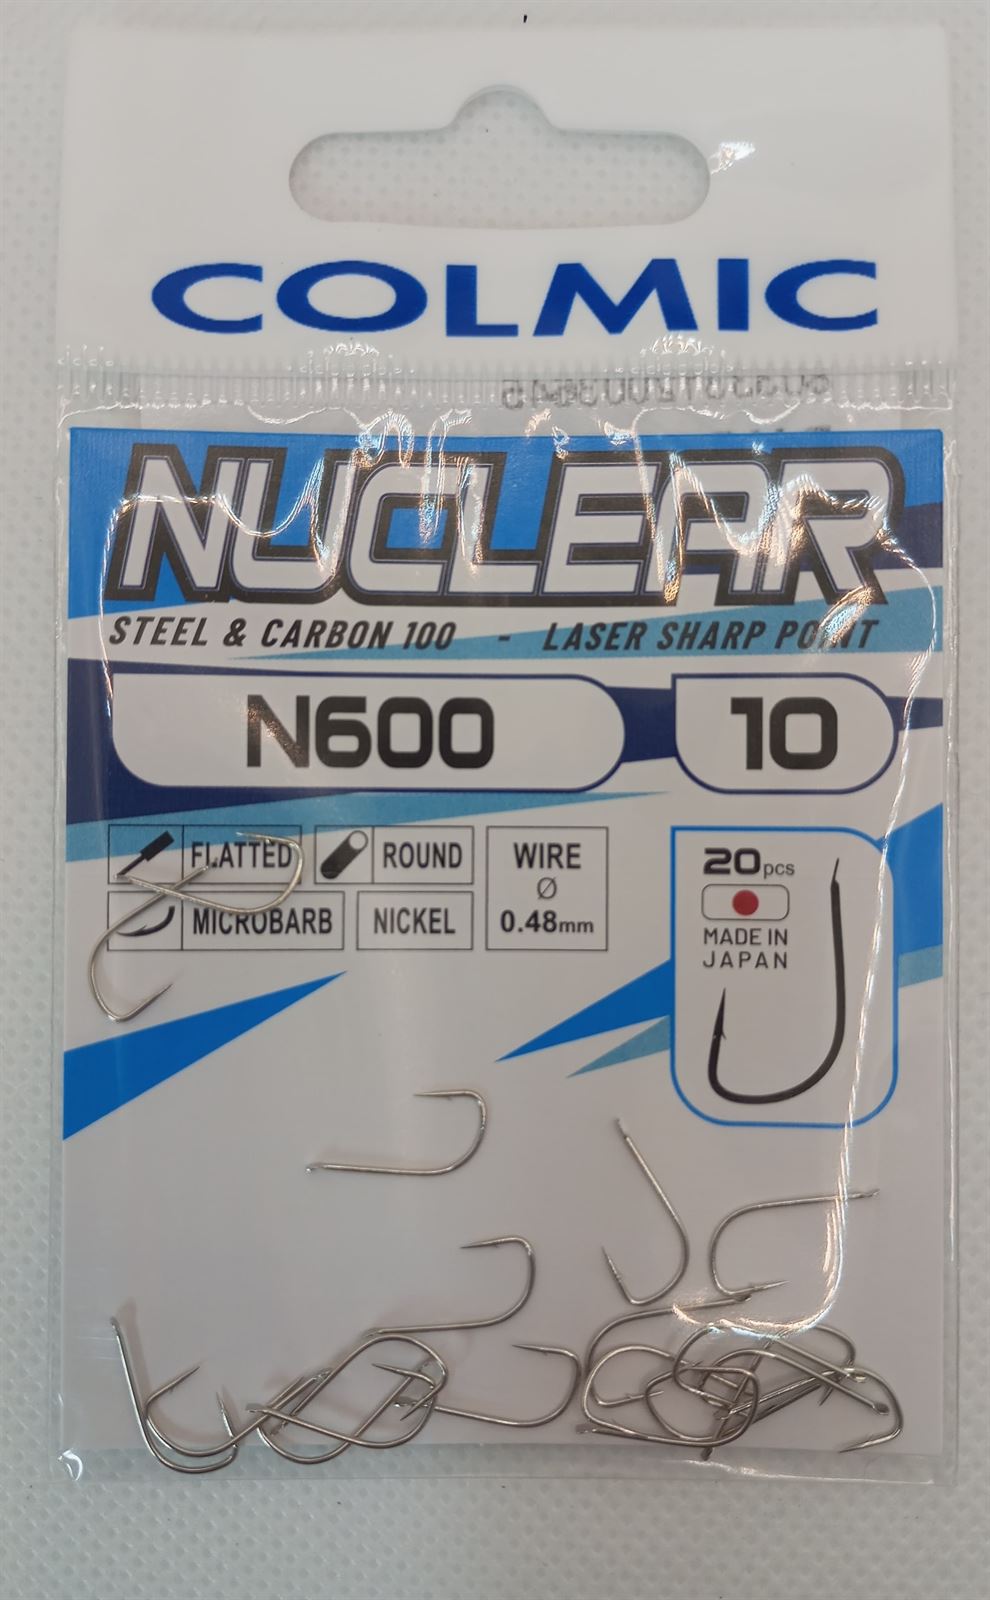 ANZUELO NUCLEAR N600 DE COLMIC - Imagen 1